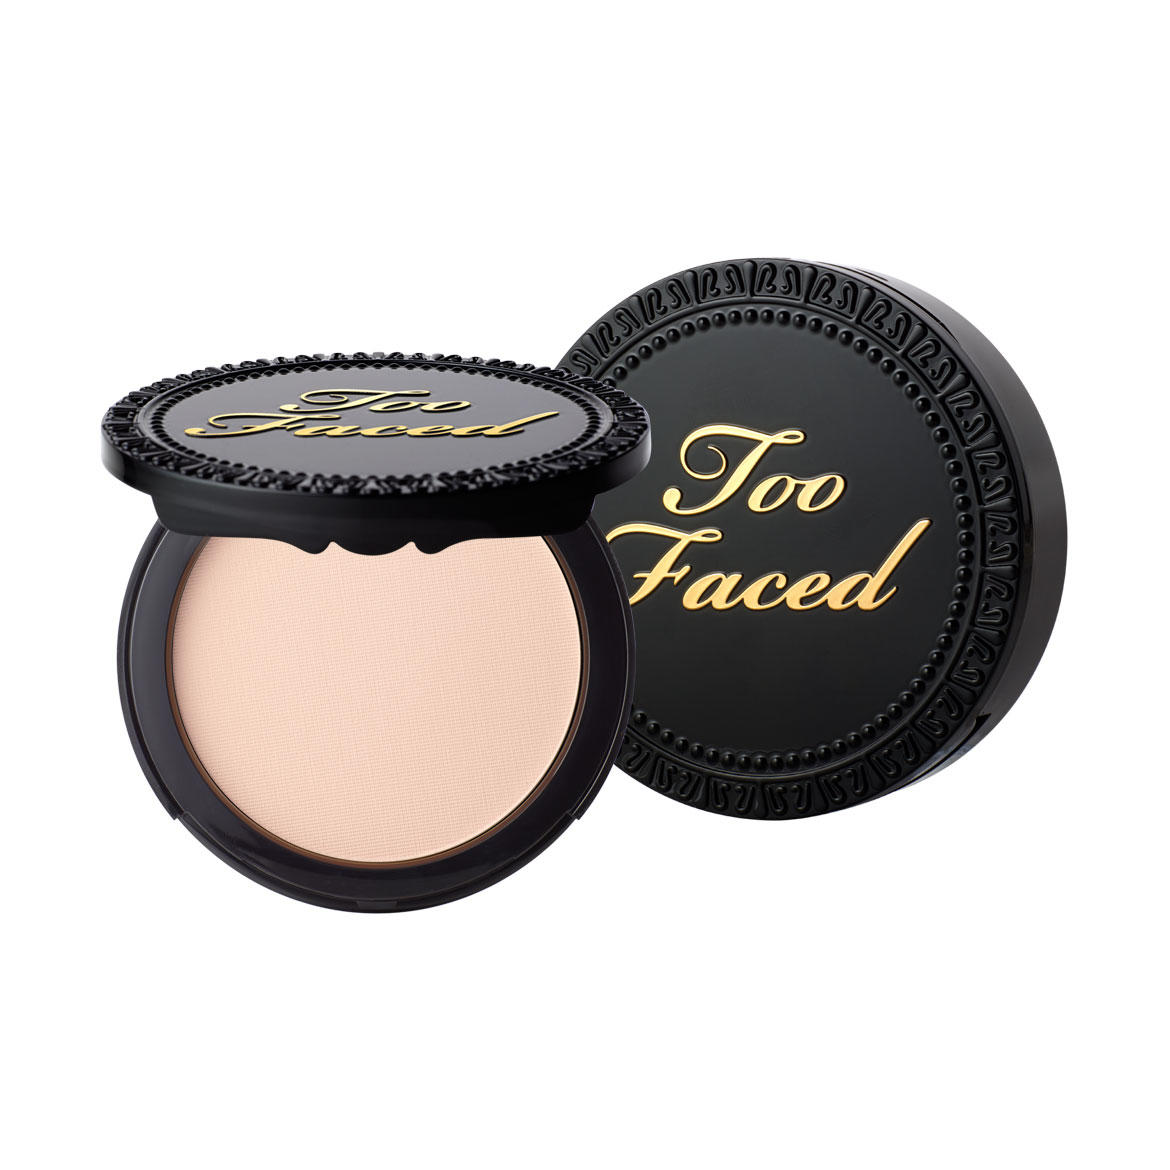 Too Faced Amazing Face Powder Foundation Vanilla Creme